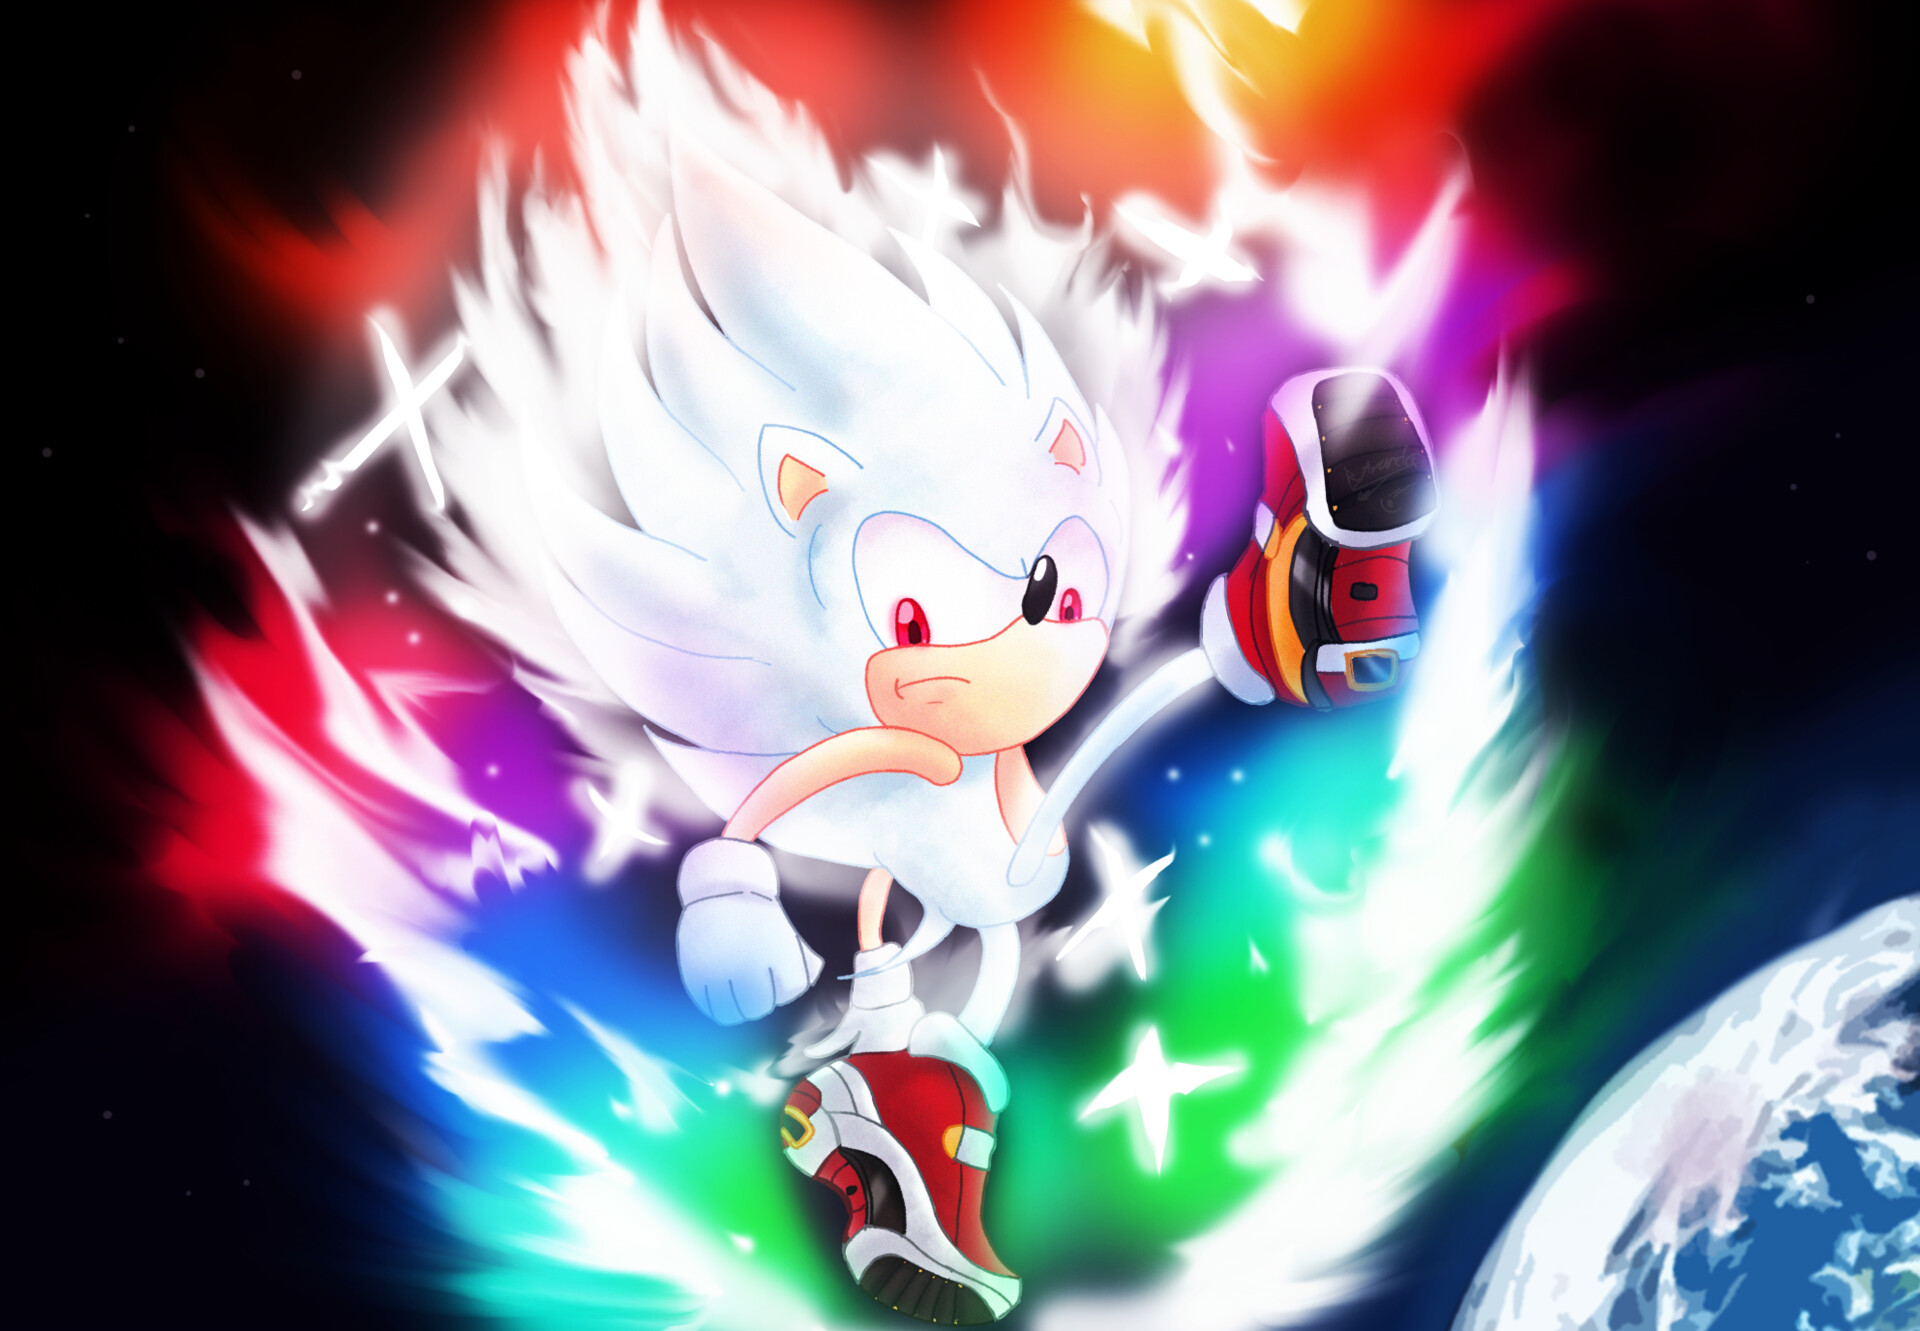 Hyper Sonic vs Super - Sonic The hedgehog Fan Page/Group